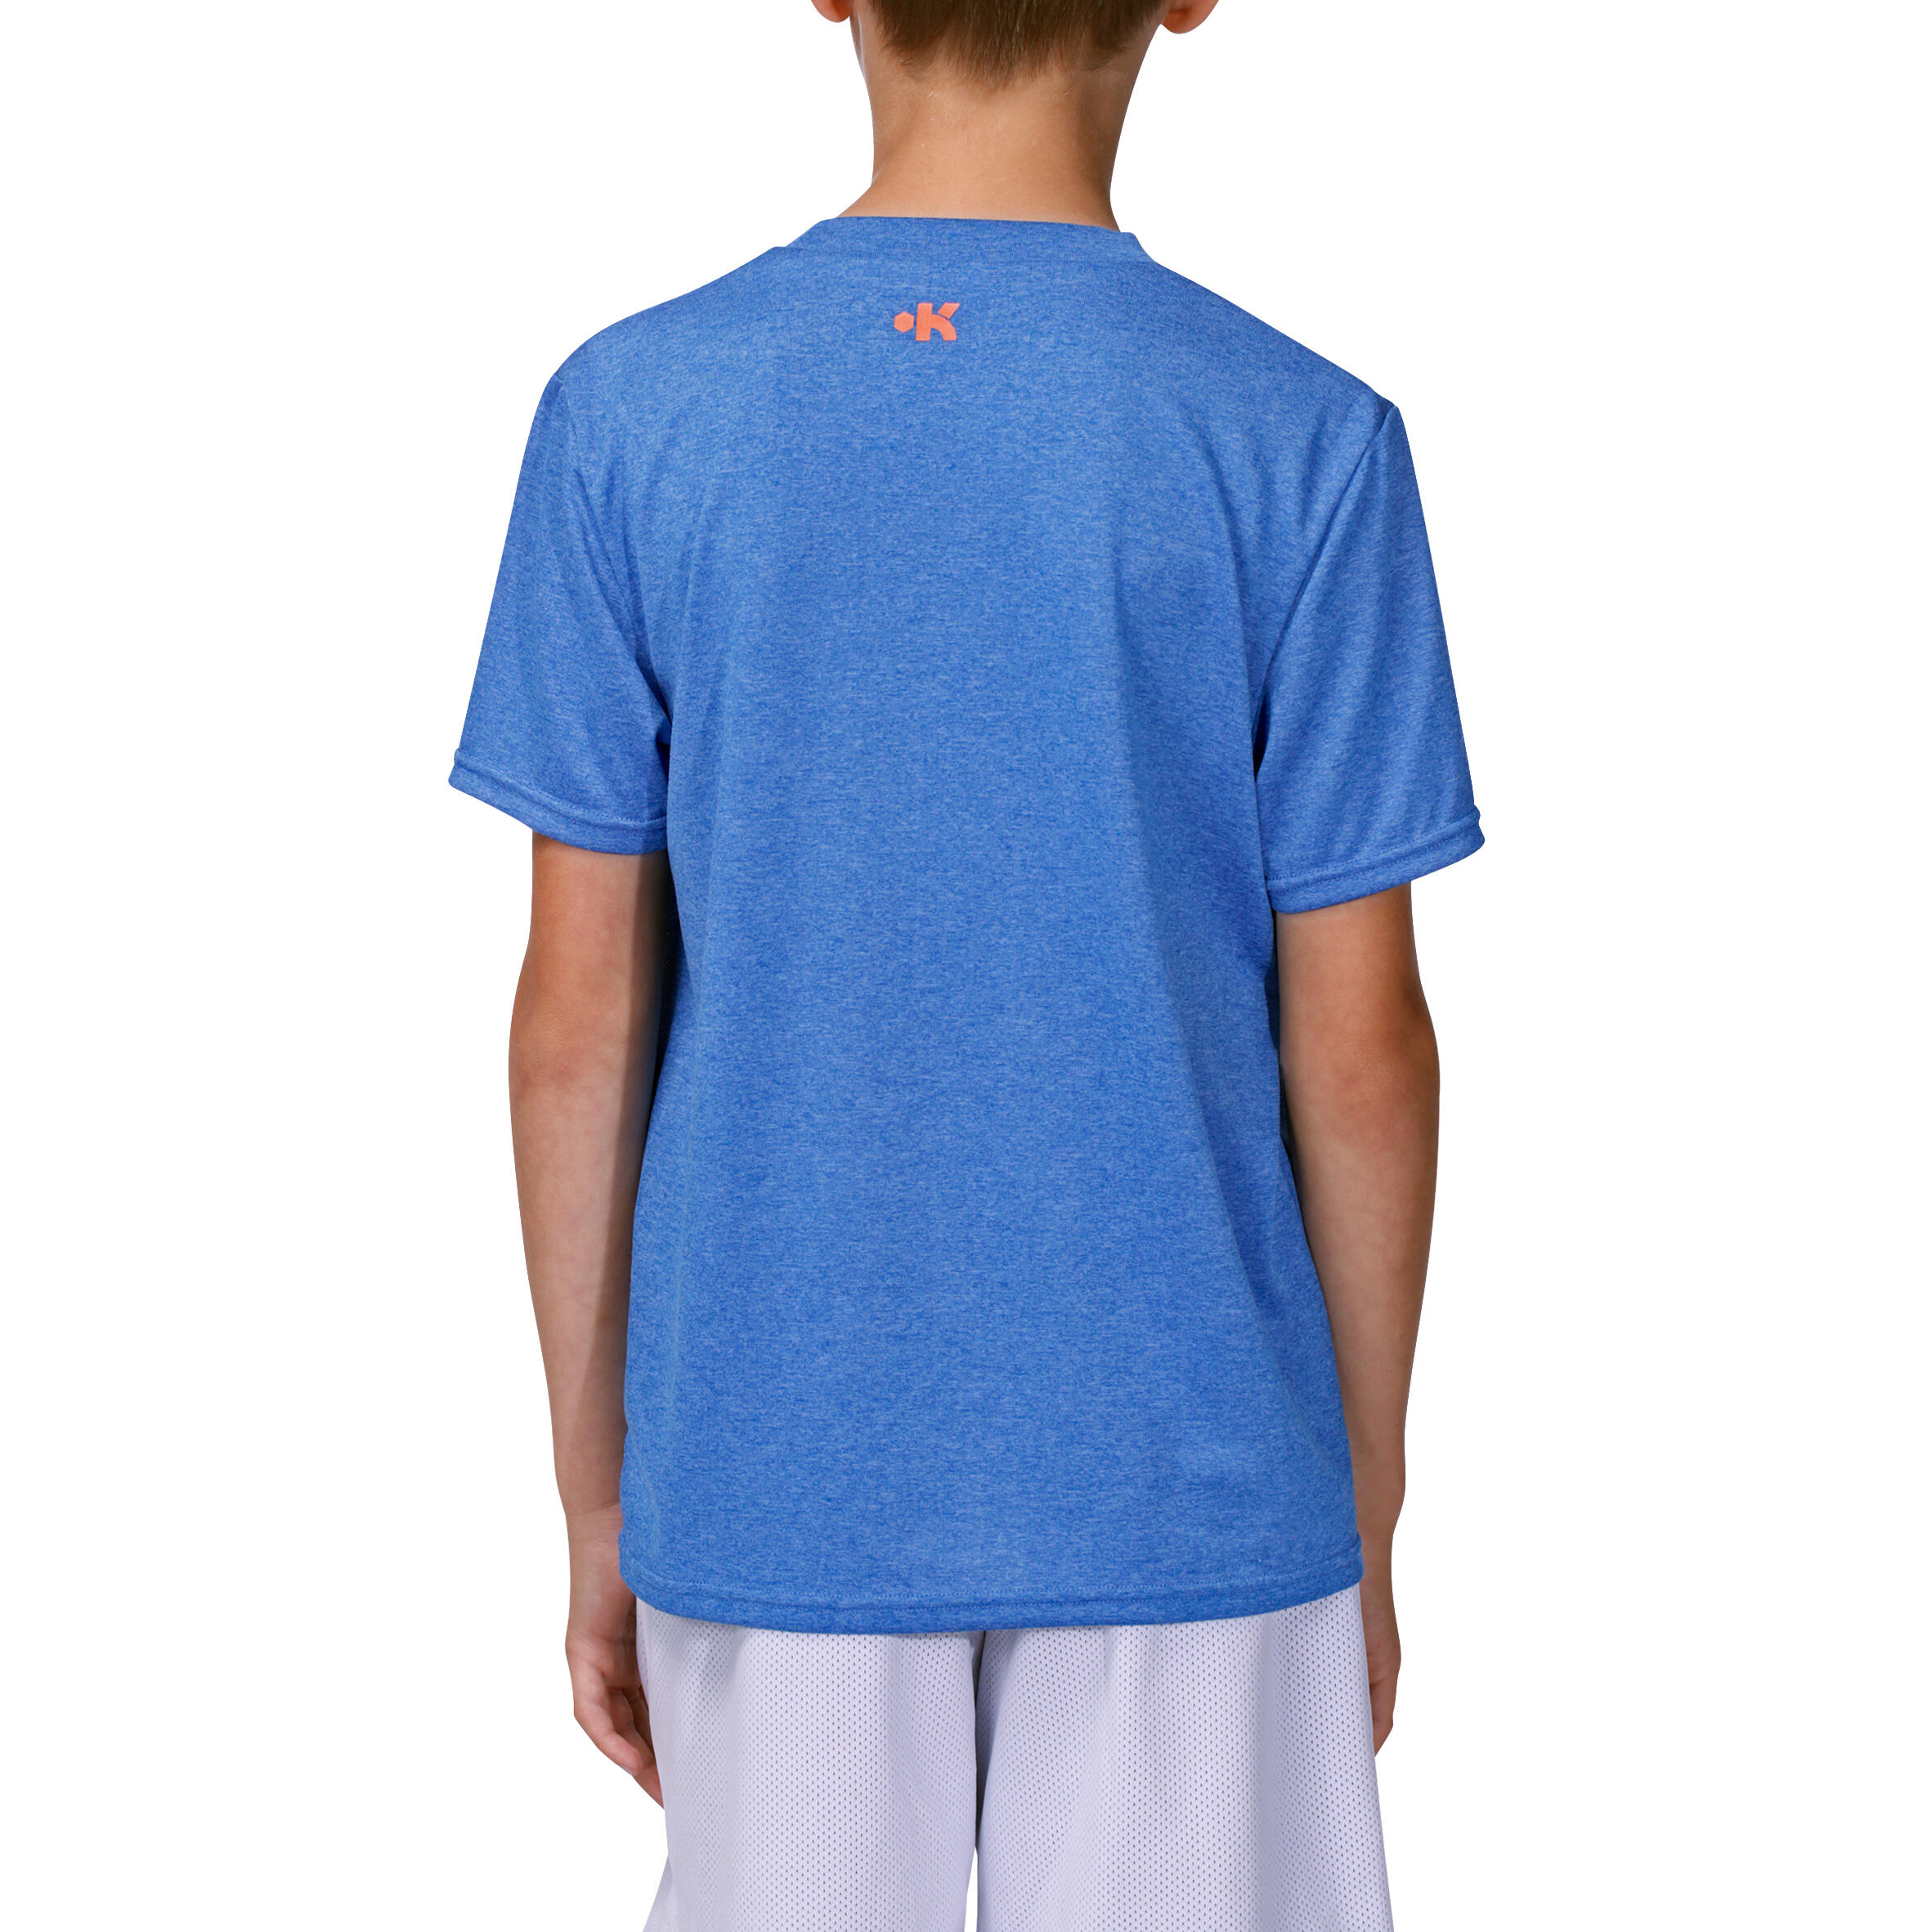 Fast NYC Kids Basketball T-Shirt - Blue 4/14